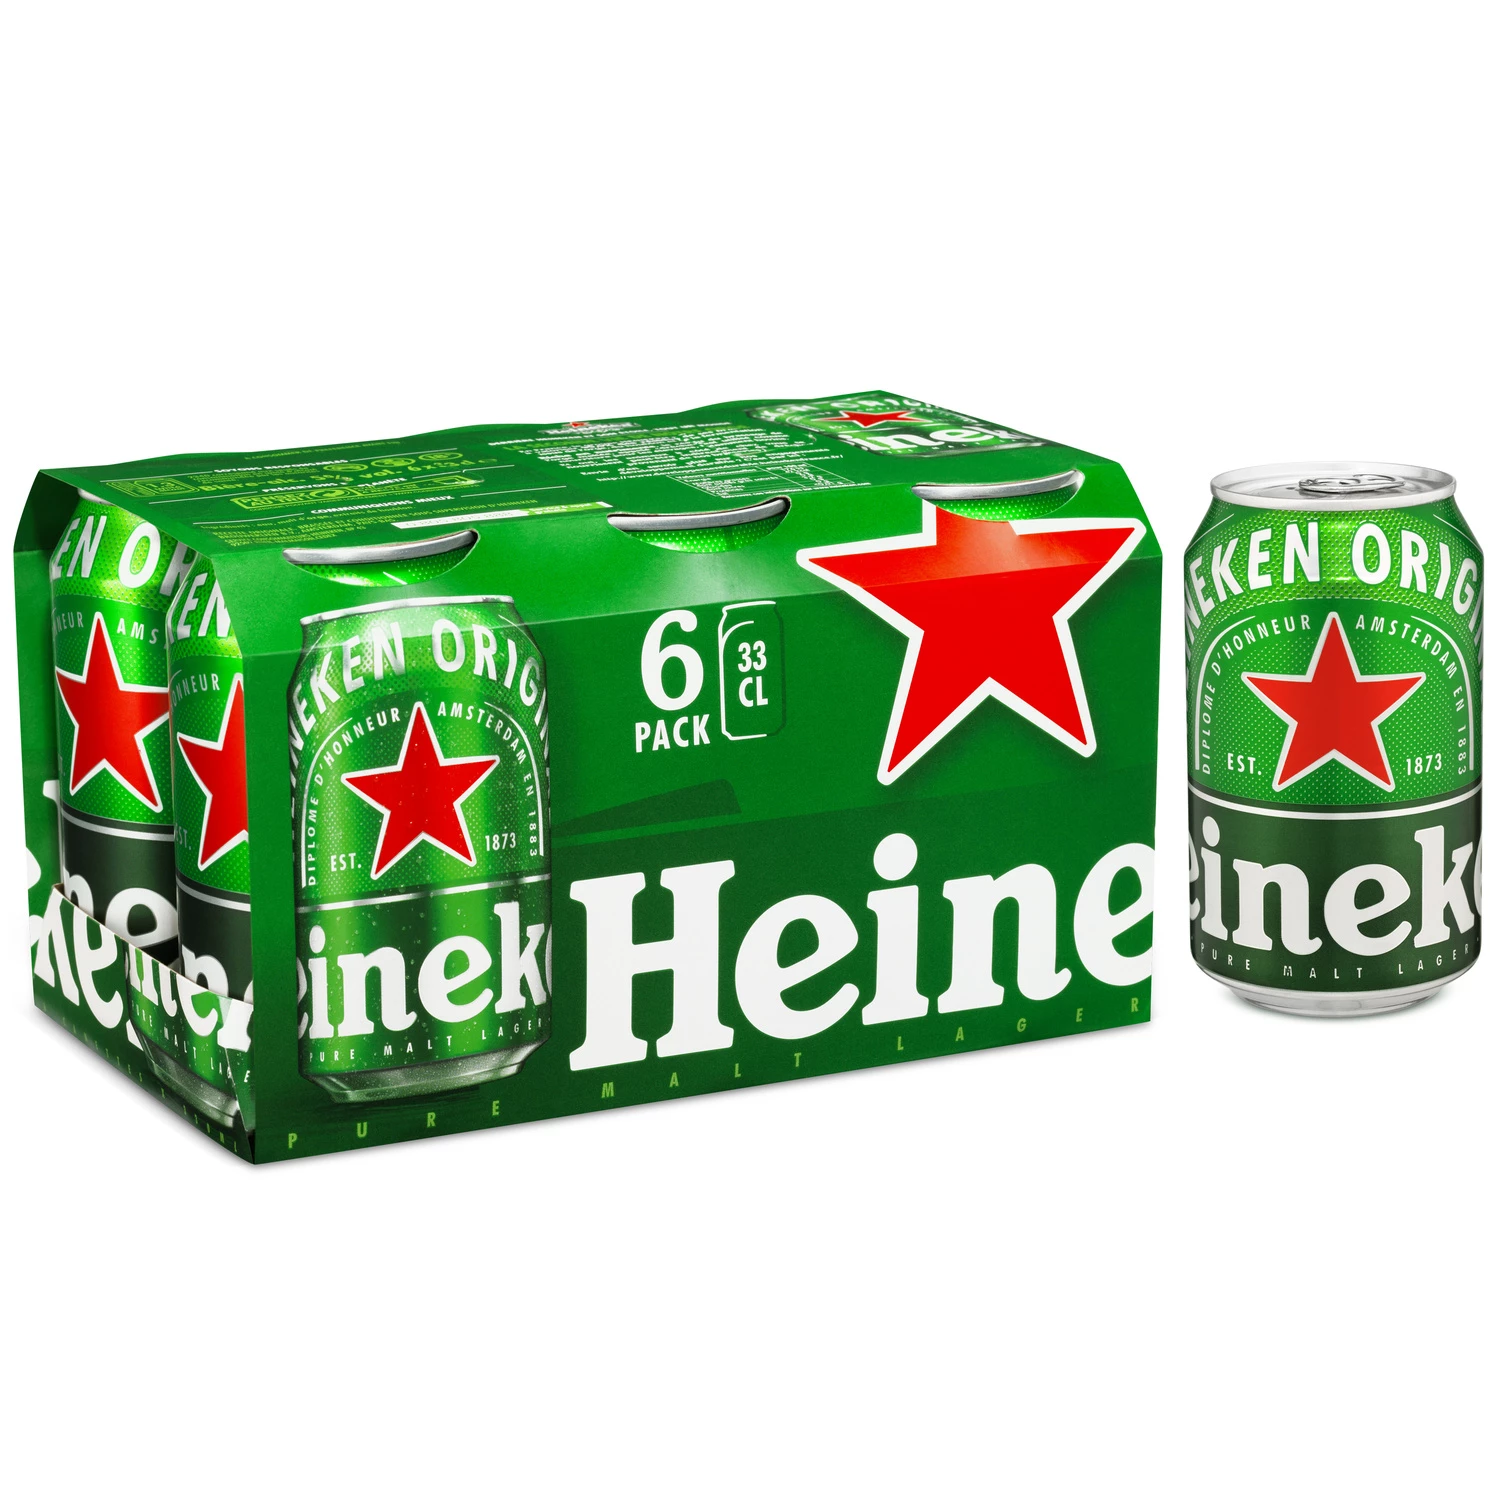 Heinek.bte Relief 5d 6x33cl